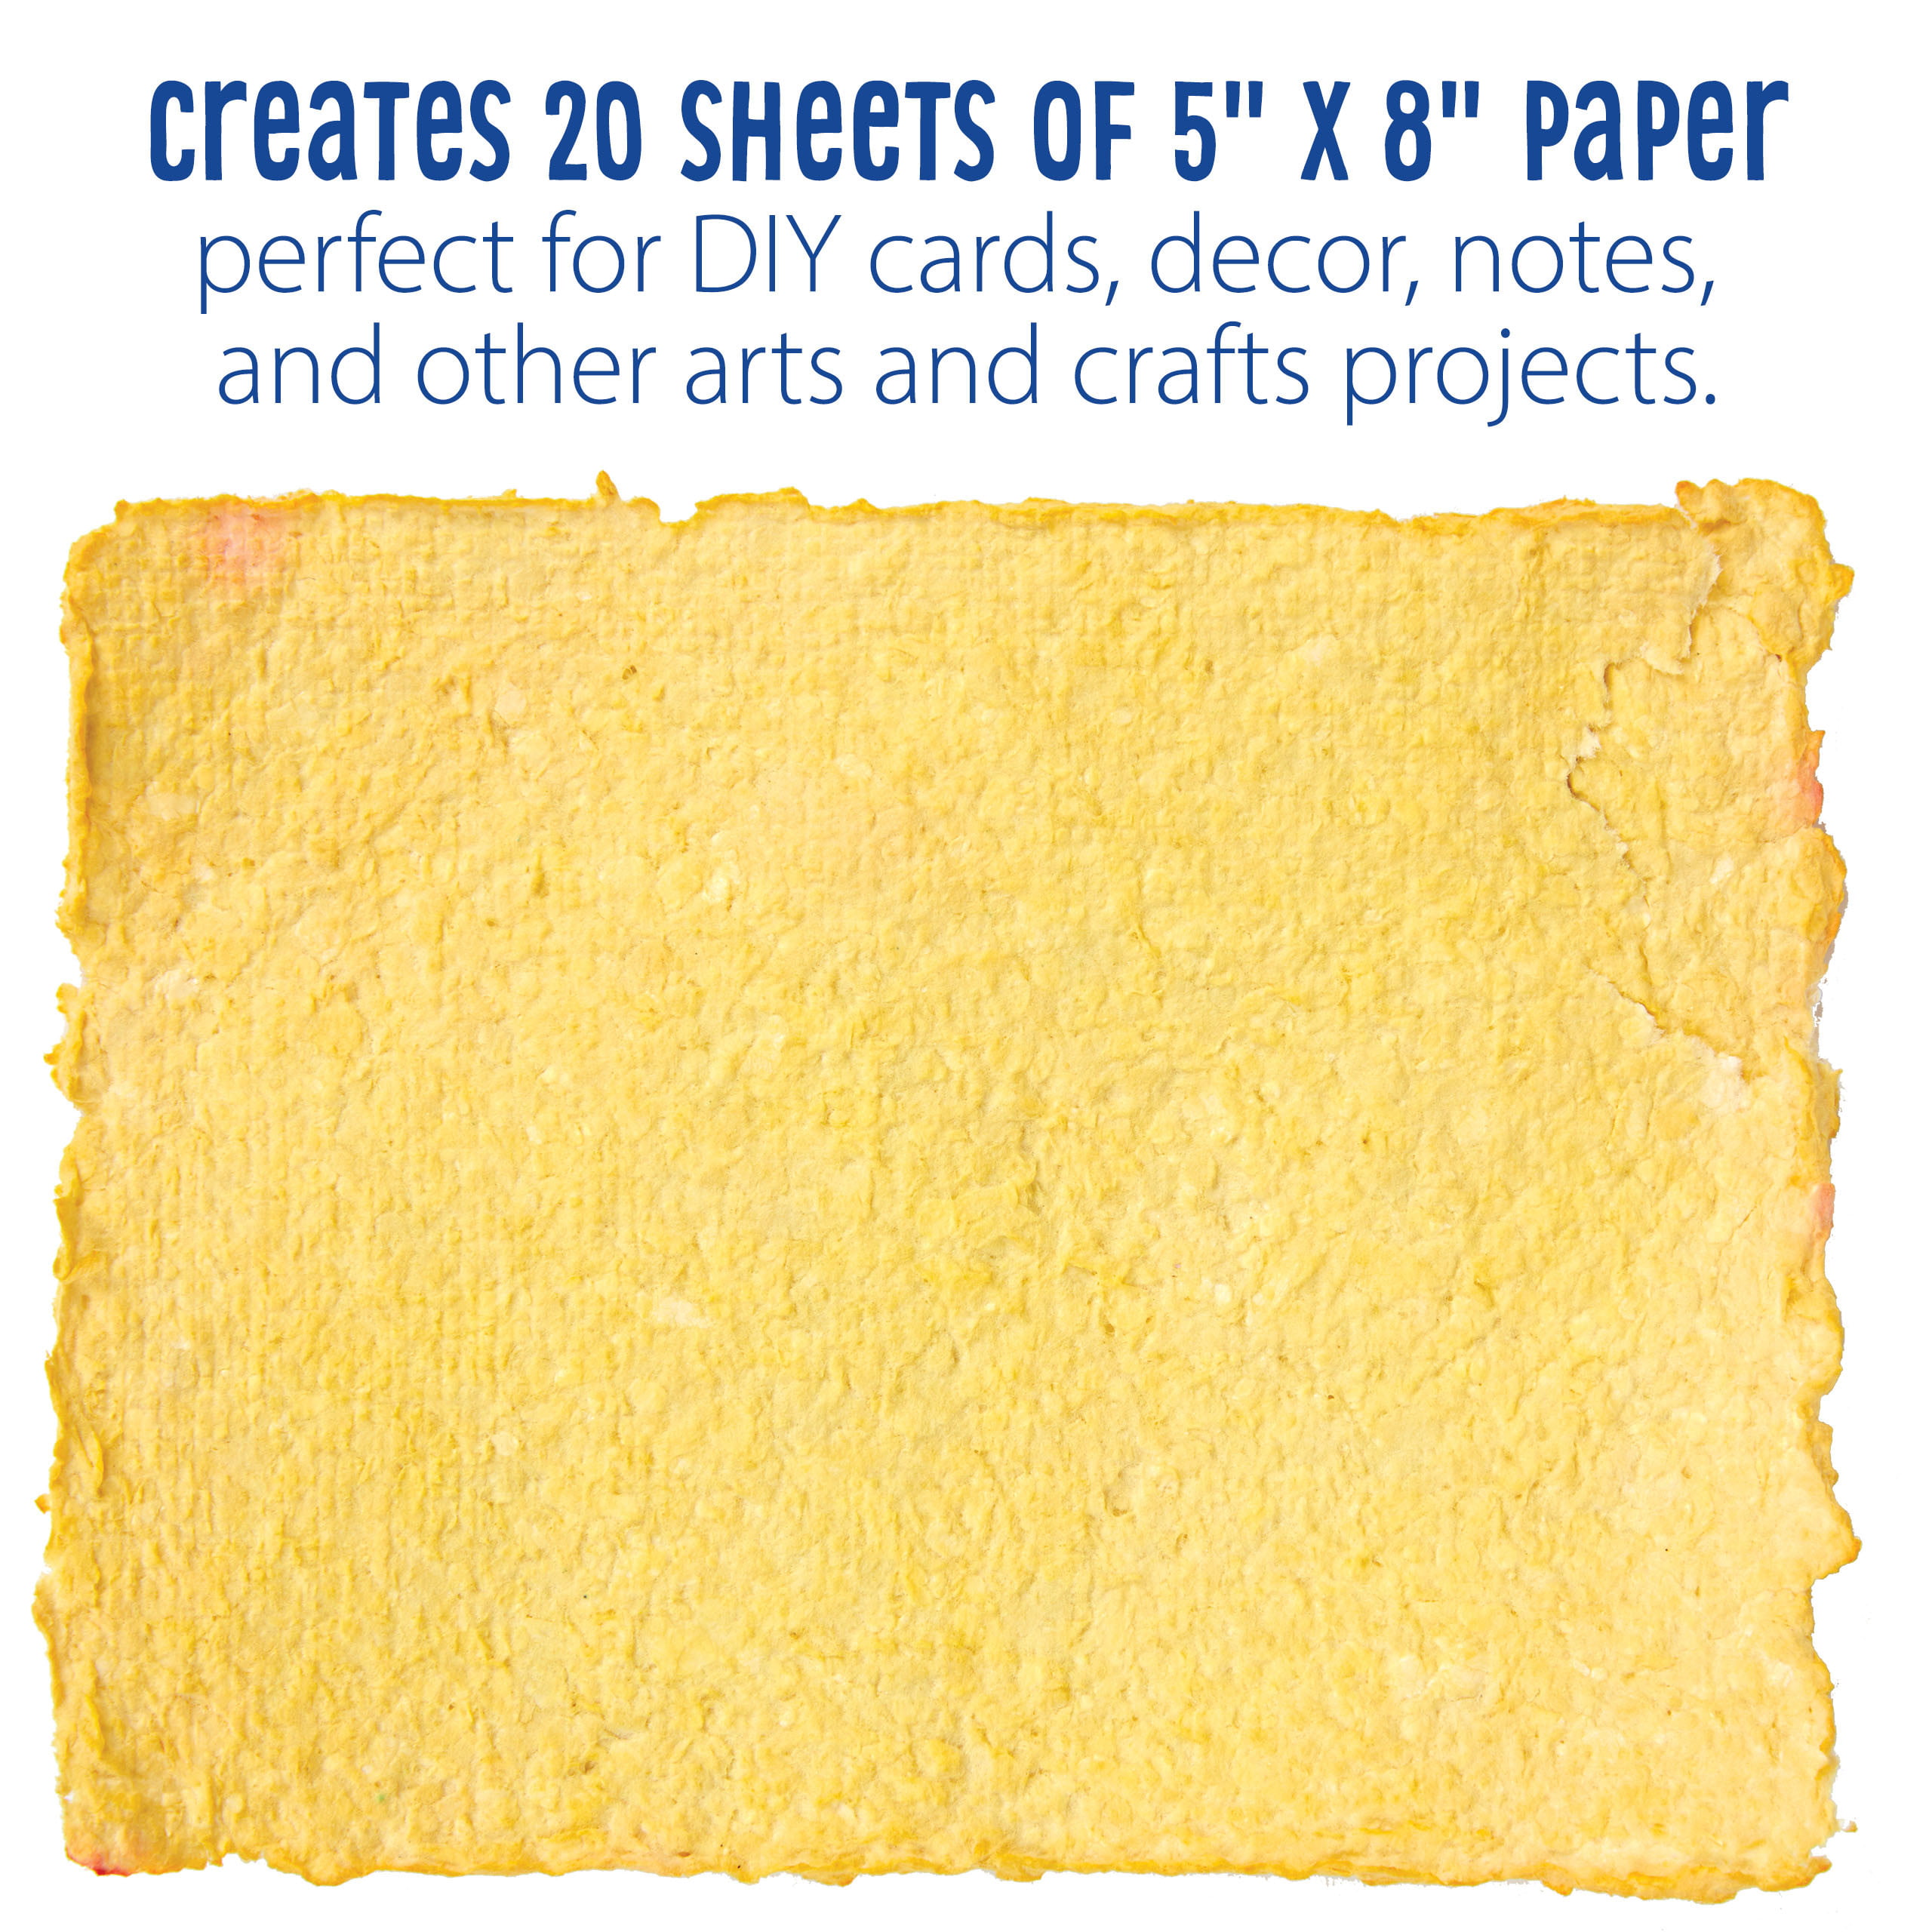 Paper Maker - Crayola – Da Vinci School Supplies